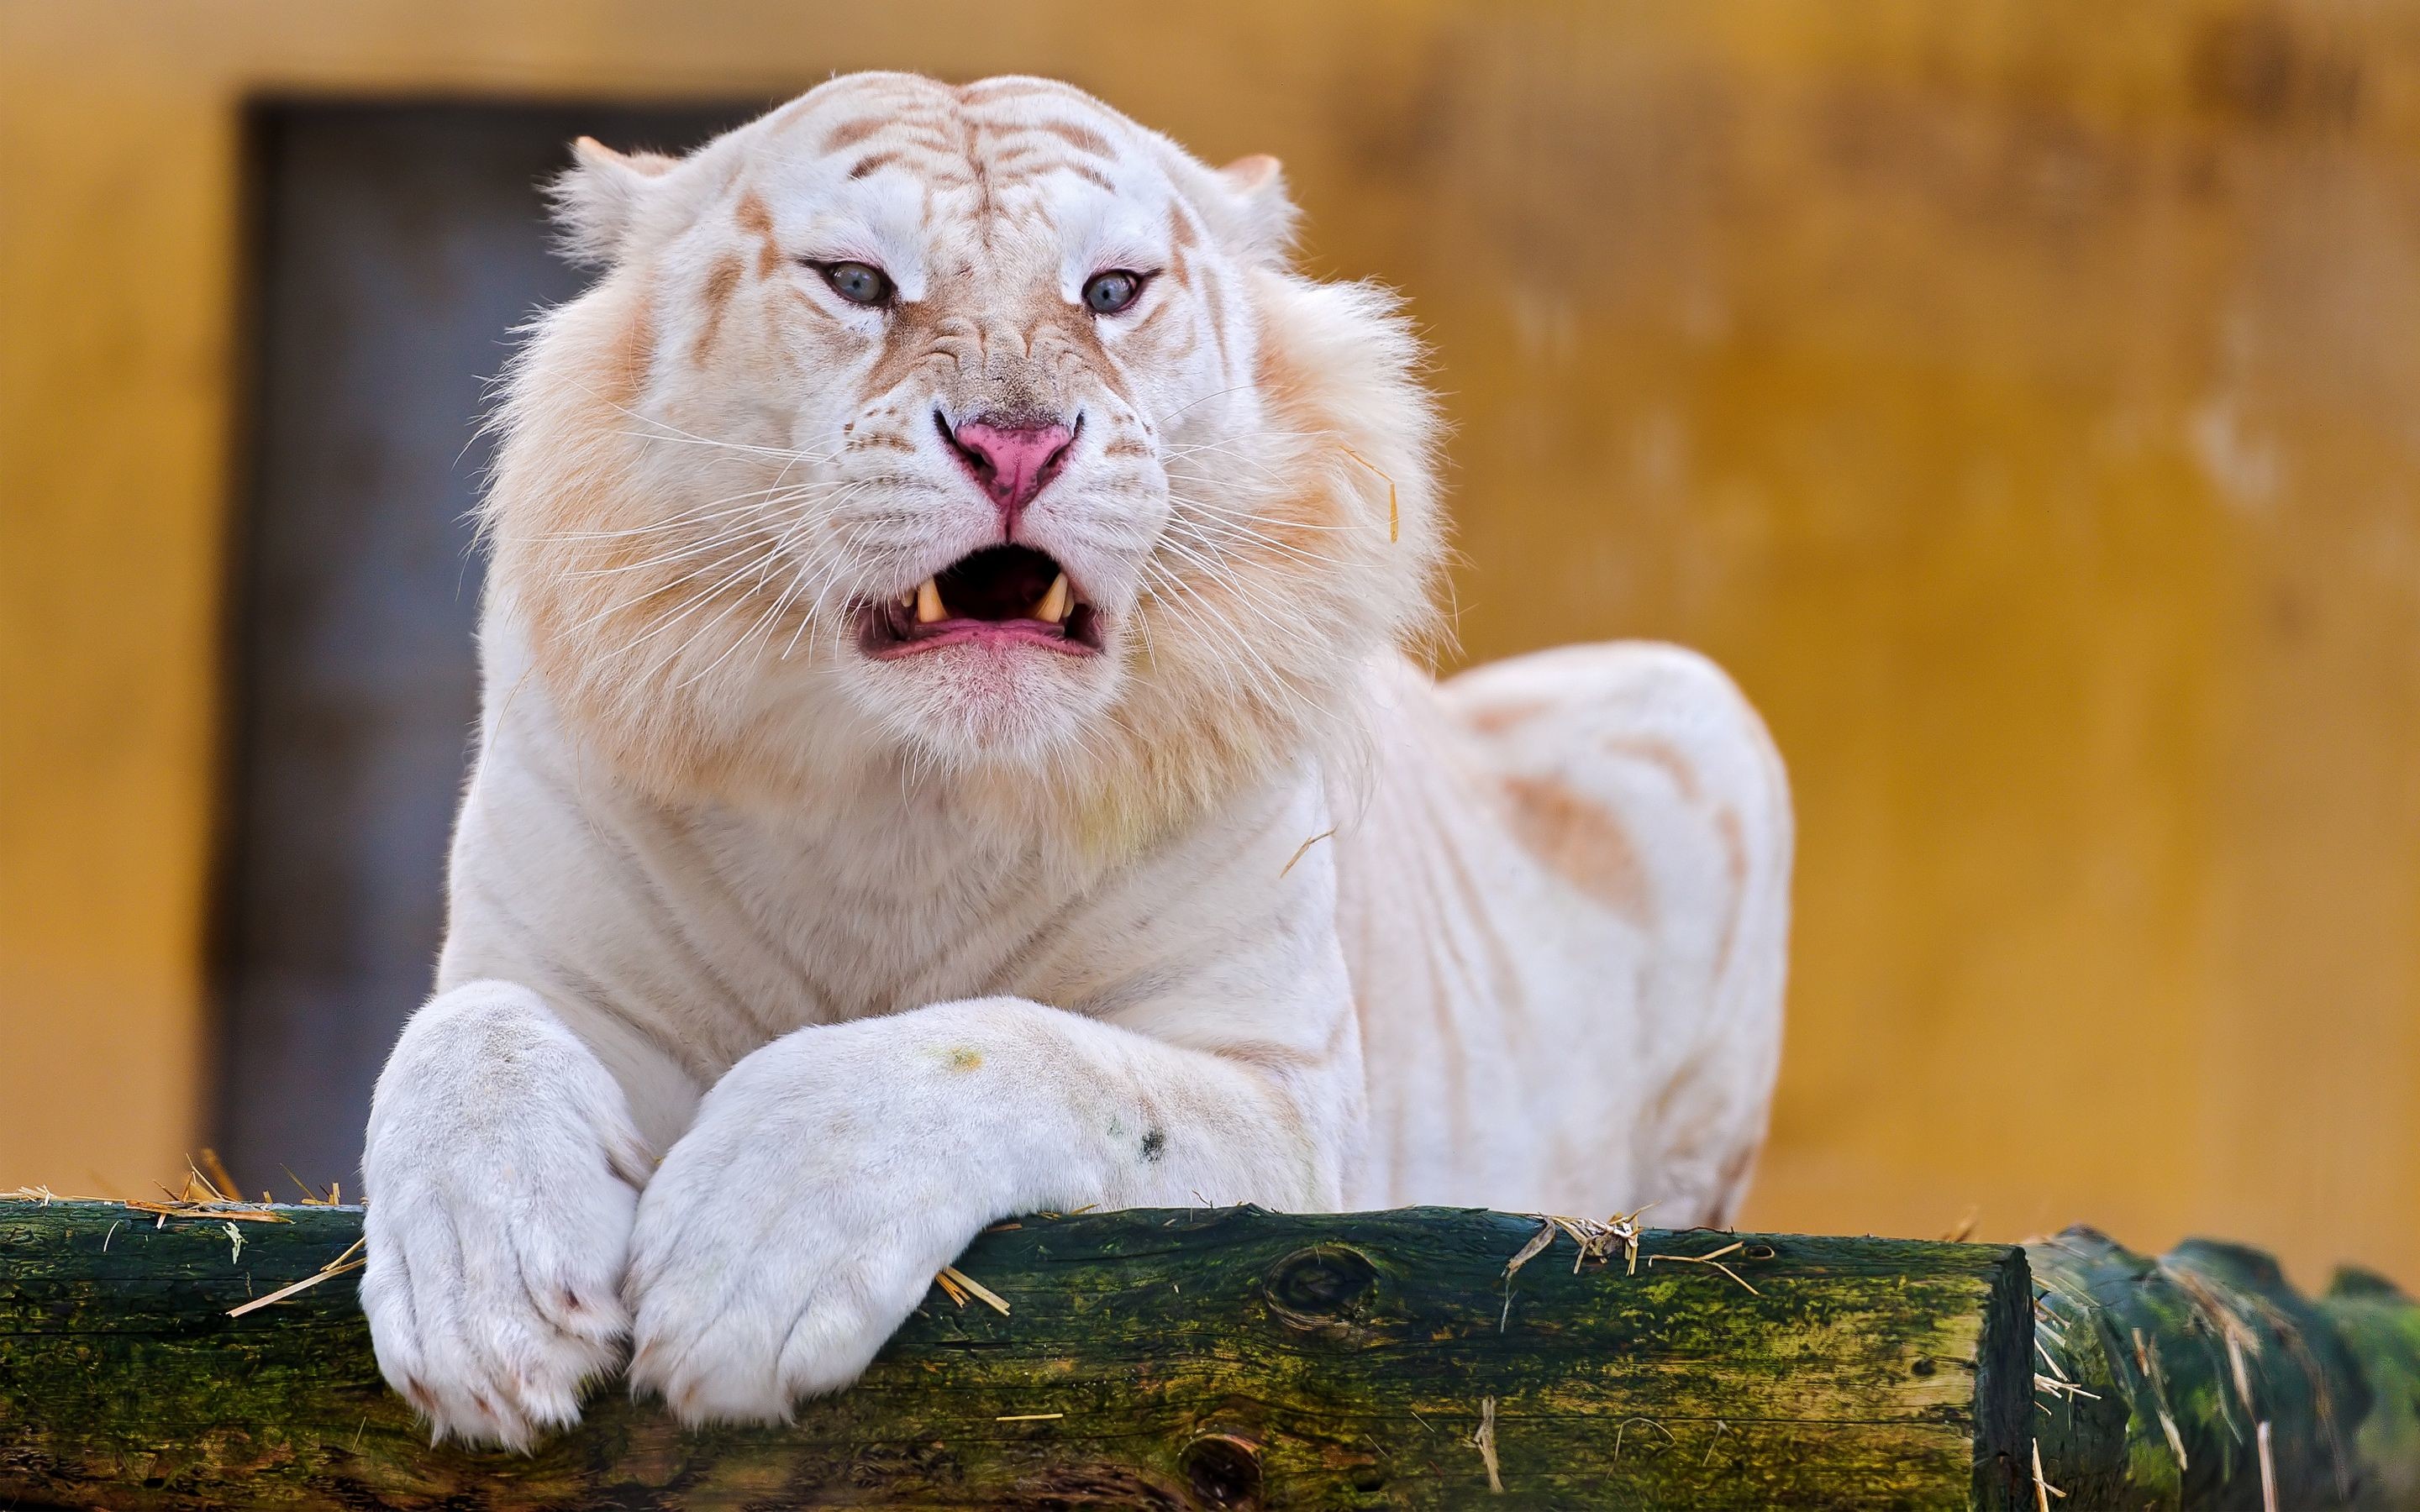 General 2880x1800 nature animals tiger albino wild cat wood fangs white tigers feline big cats closeup